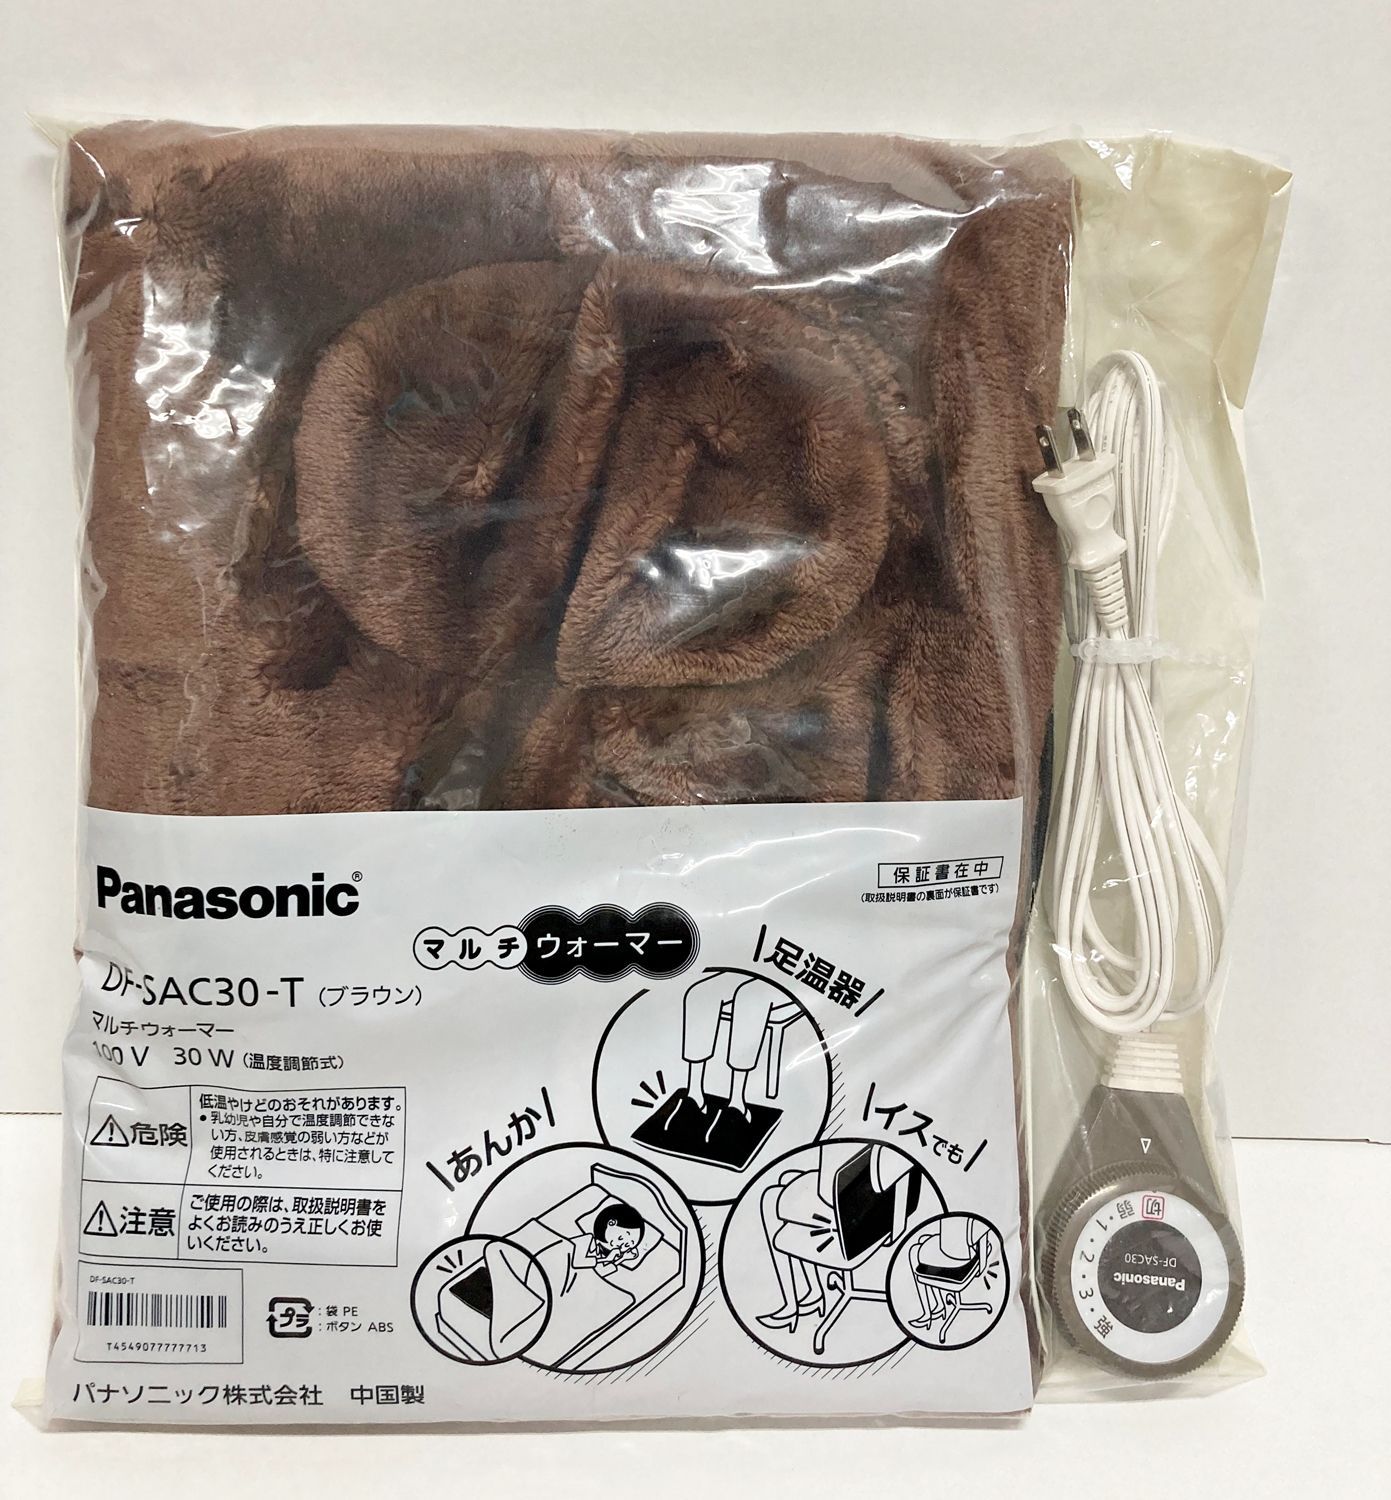 Panasonic DF-SAC30-T BROWN